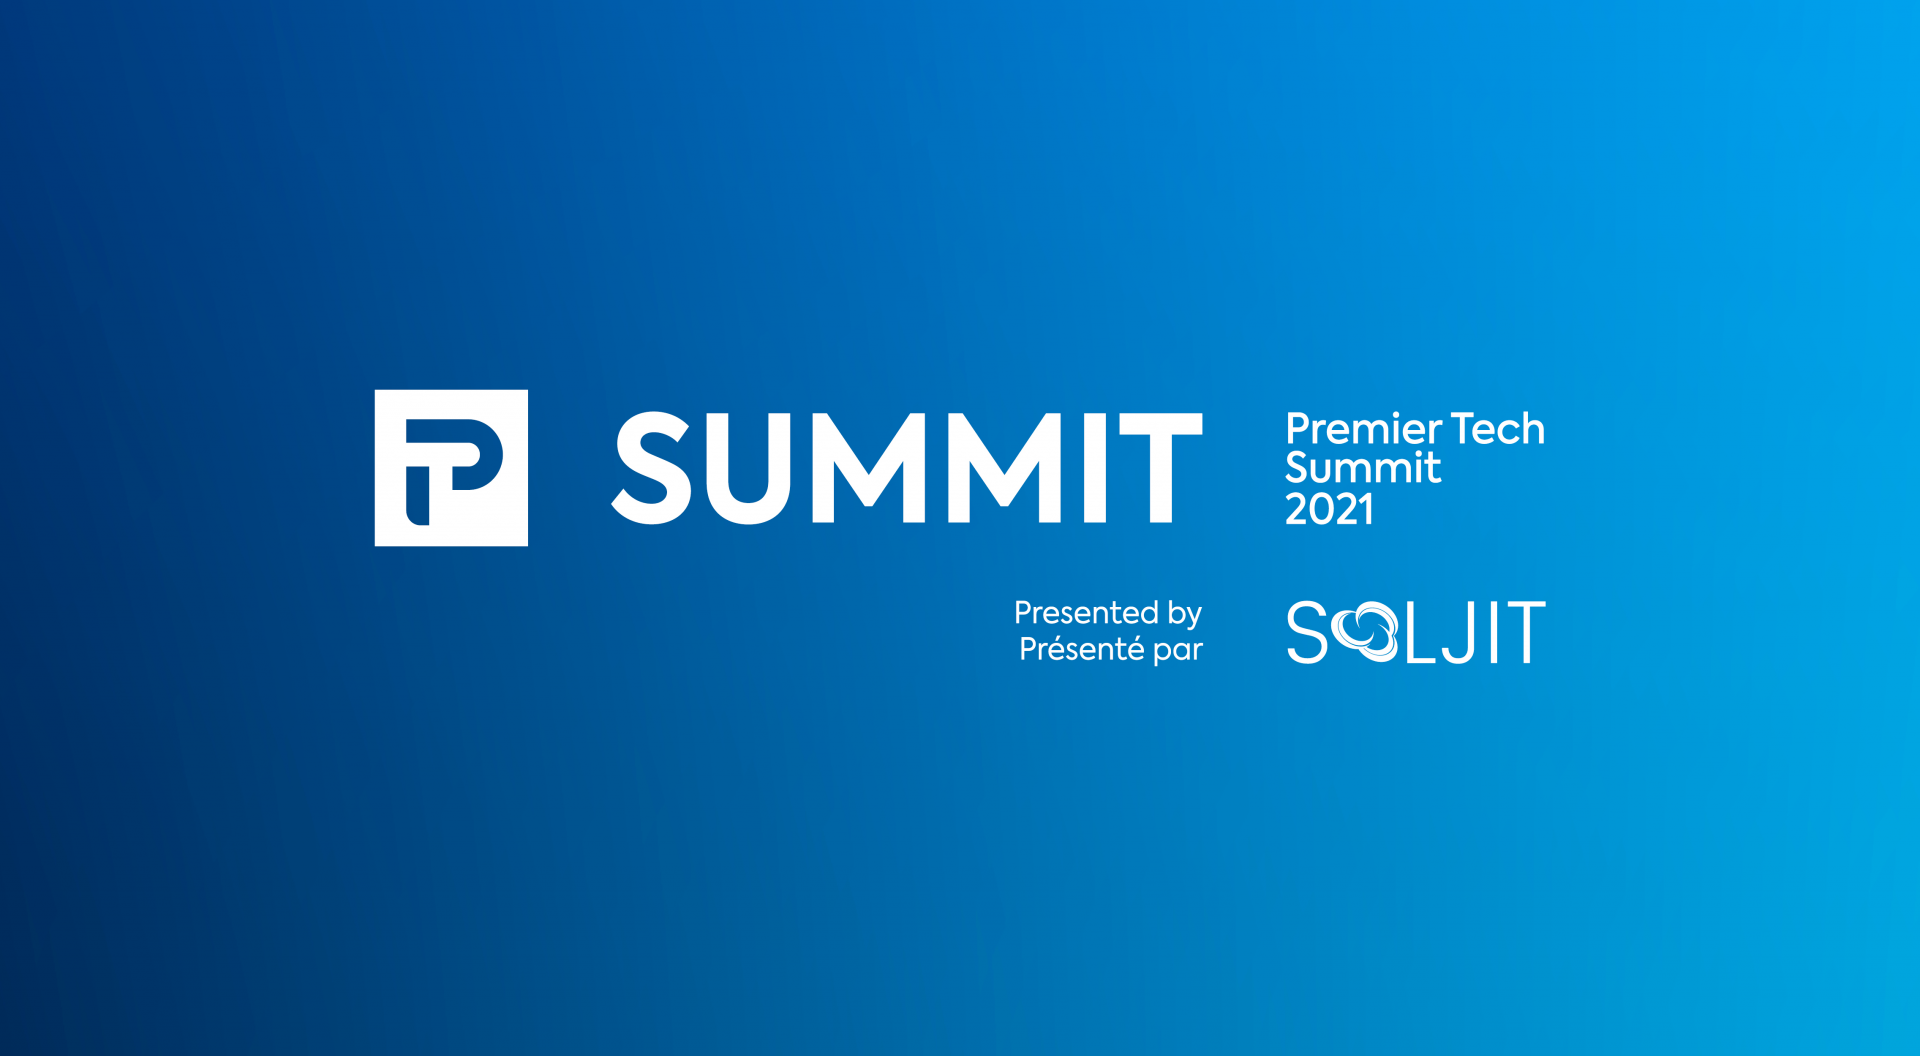 Premier Tech Summit 2021